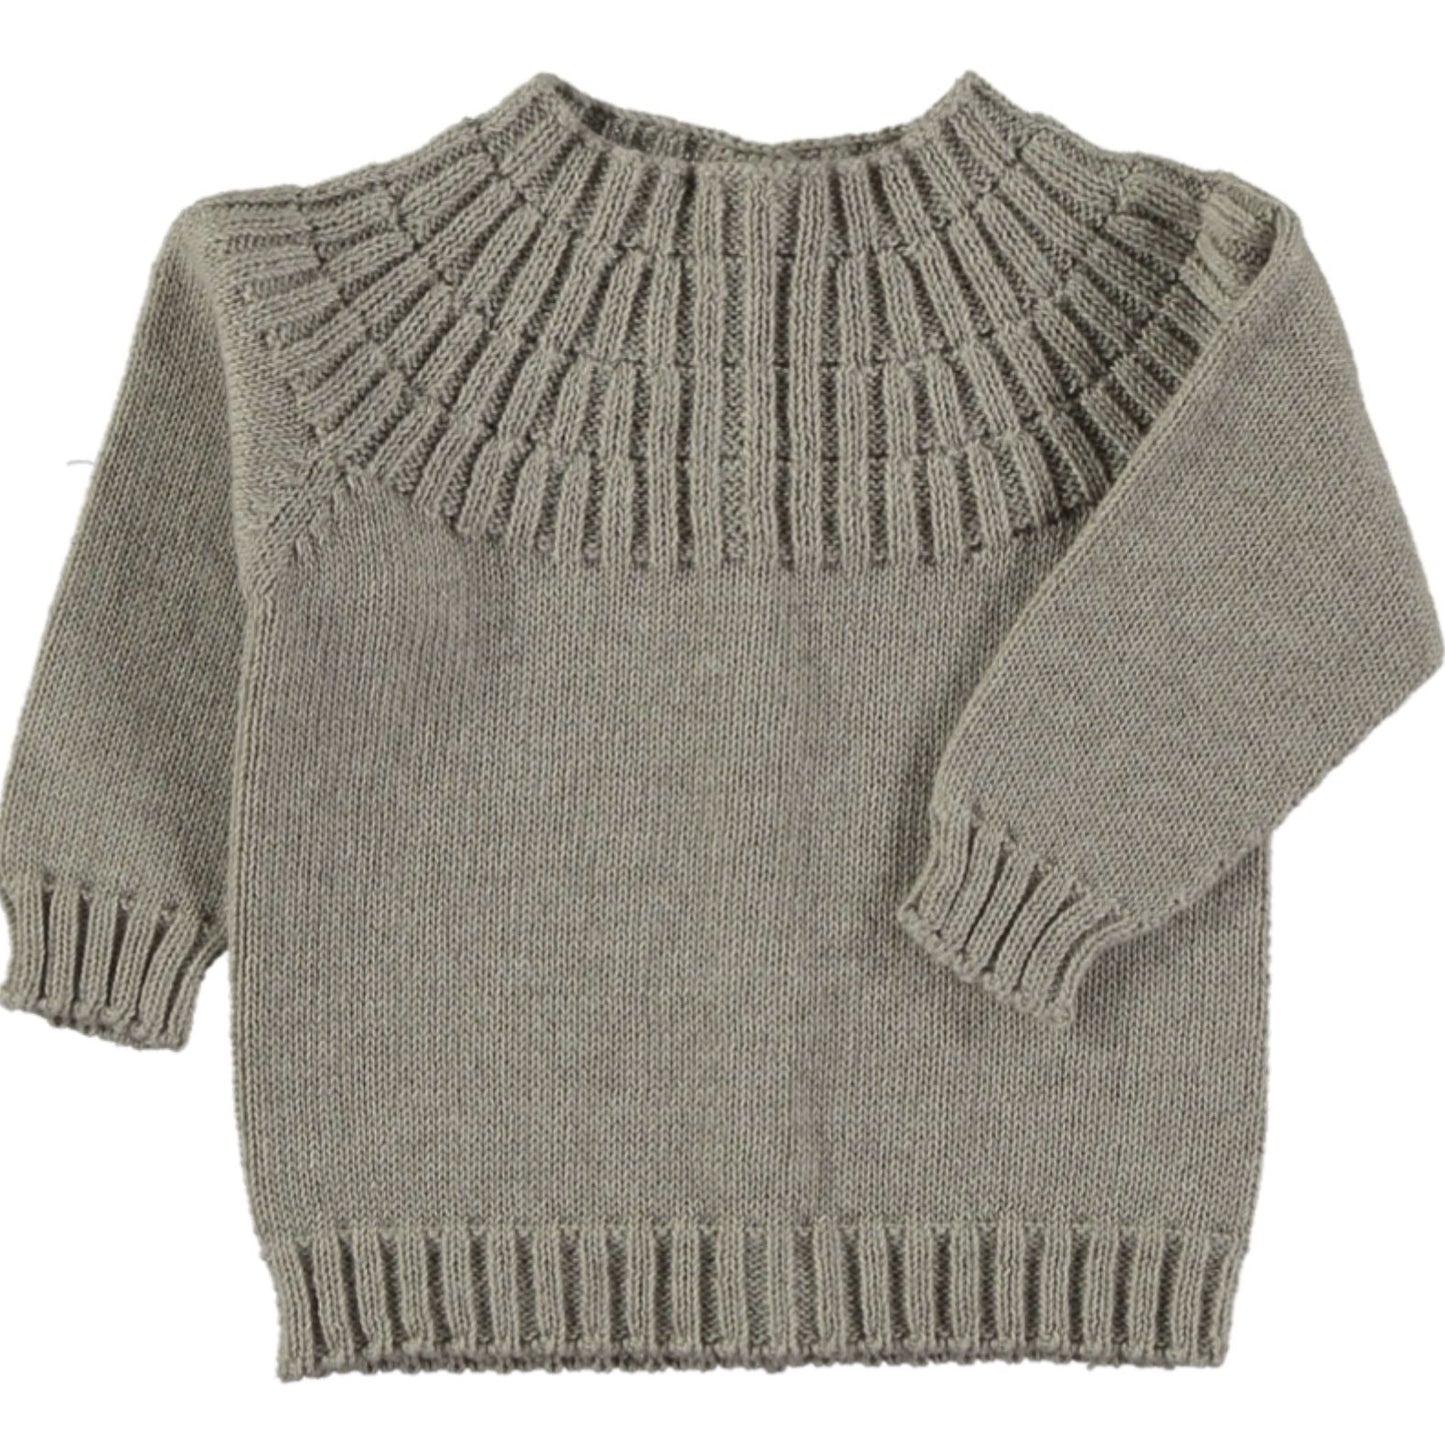 Stone Knit Sweater 130 BABY BOYS/NEUTRAL APPAREL Li & Me NB 